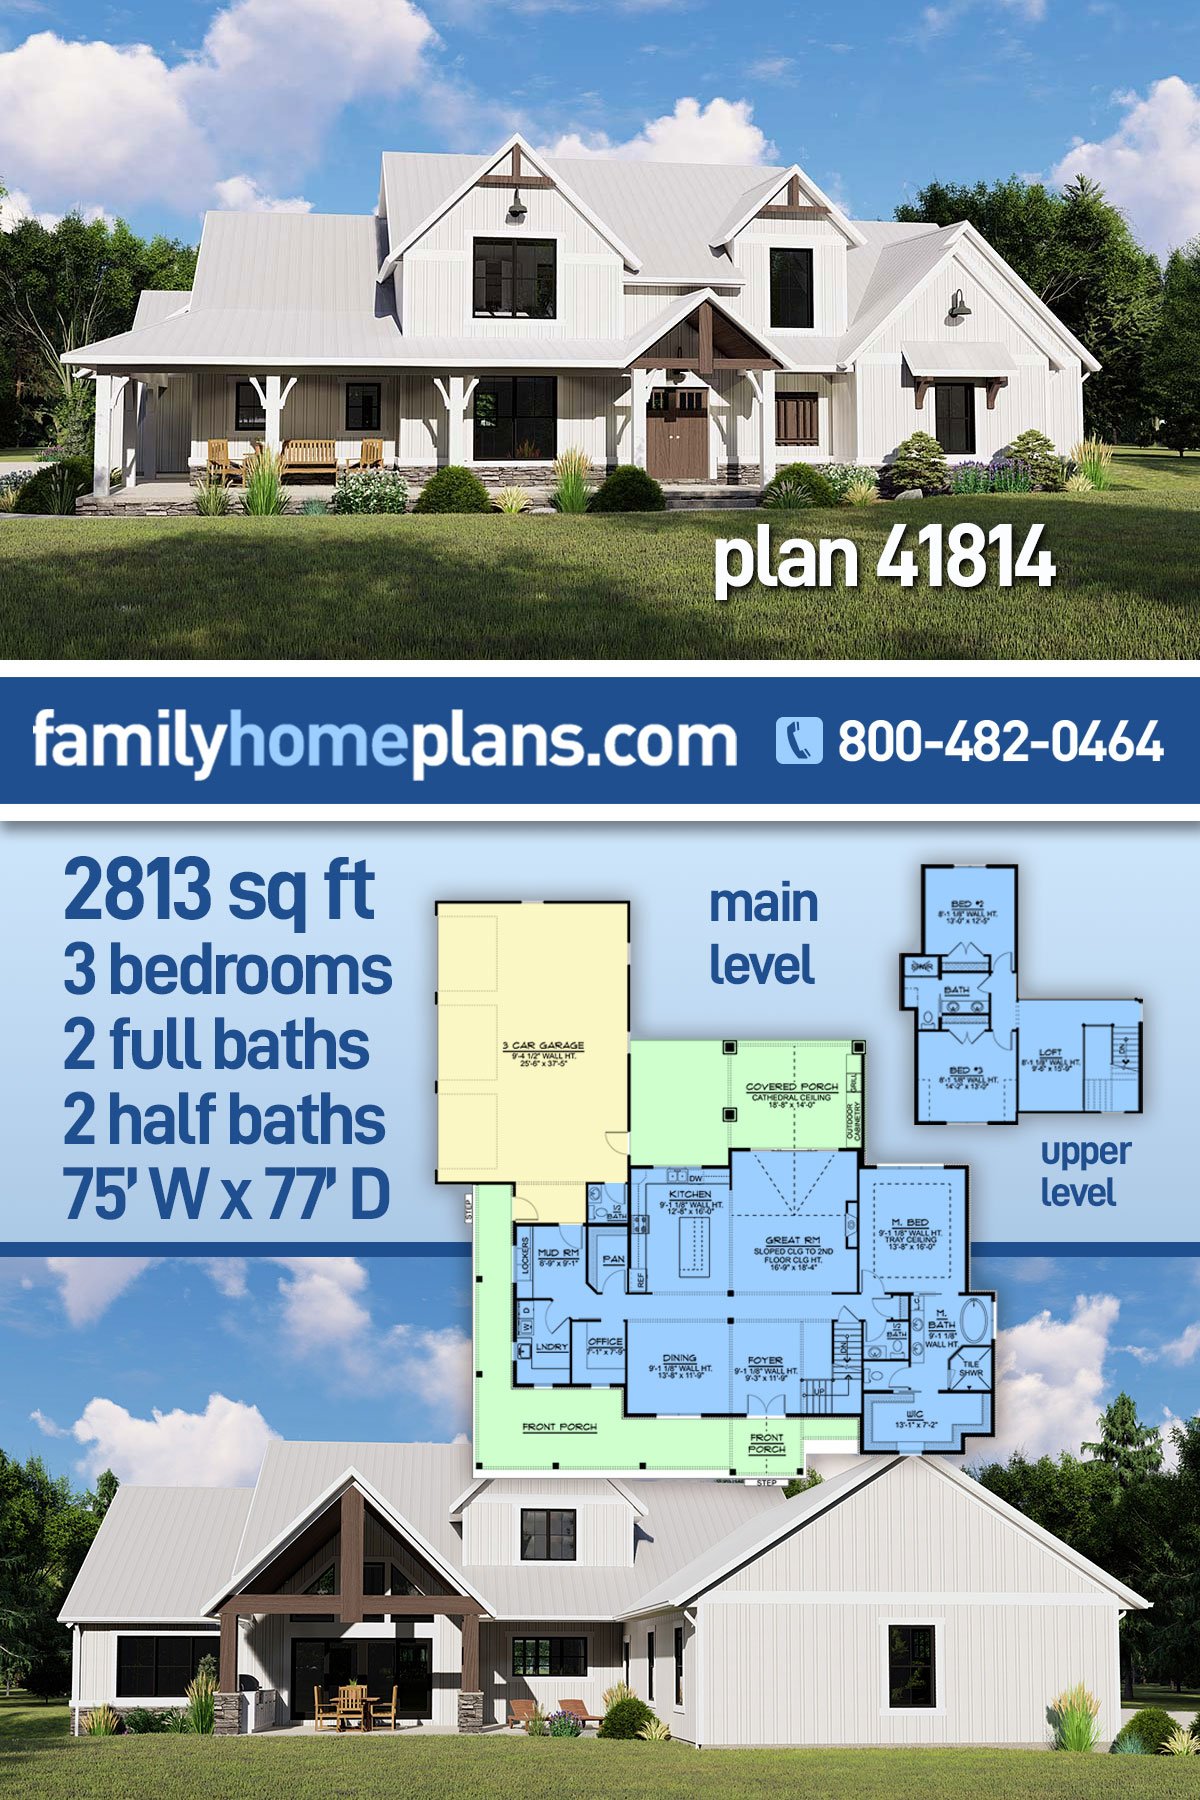 House Plan 41814